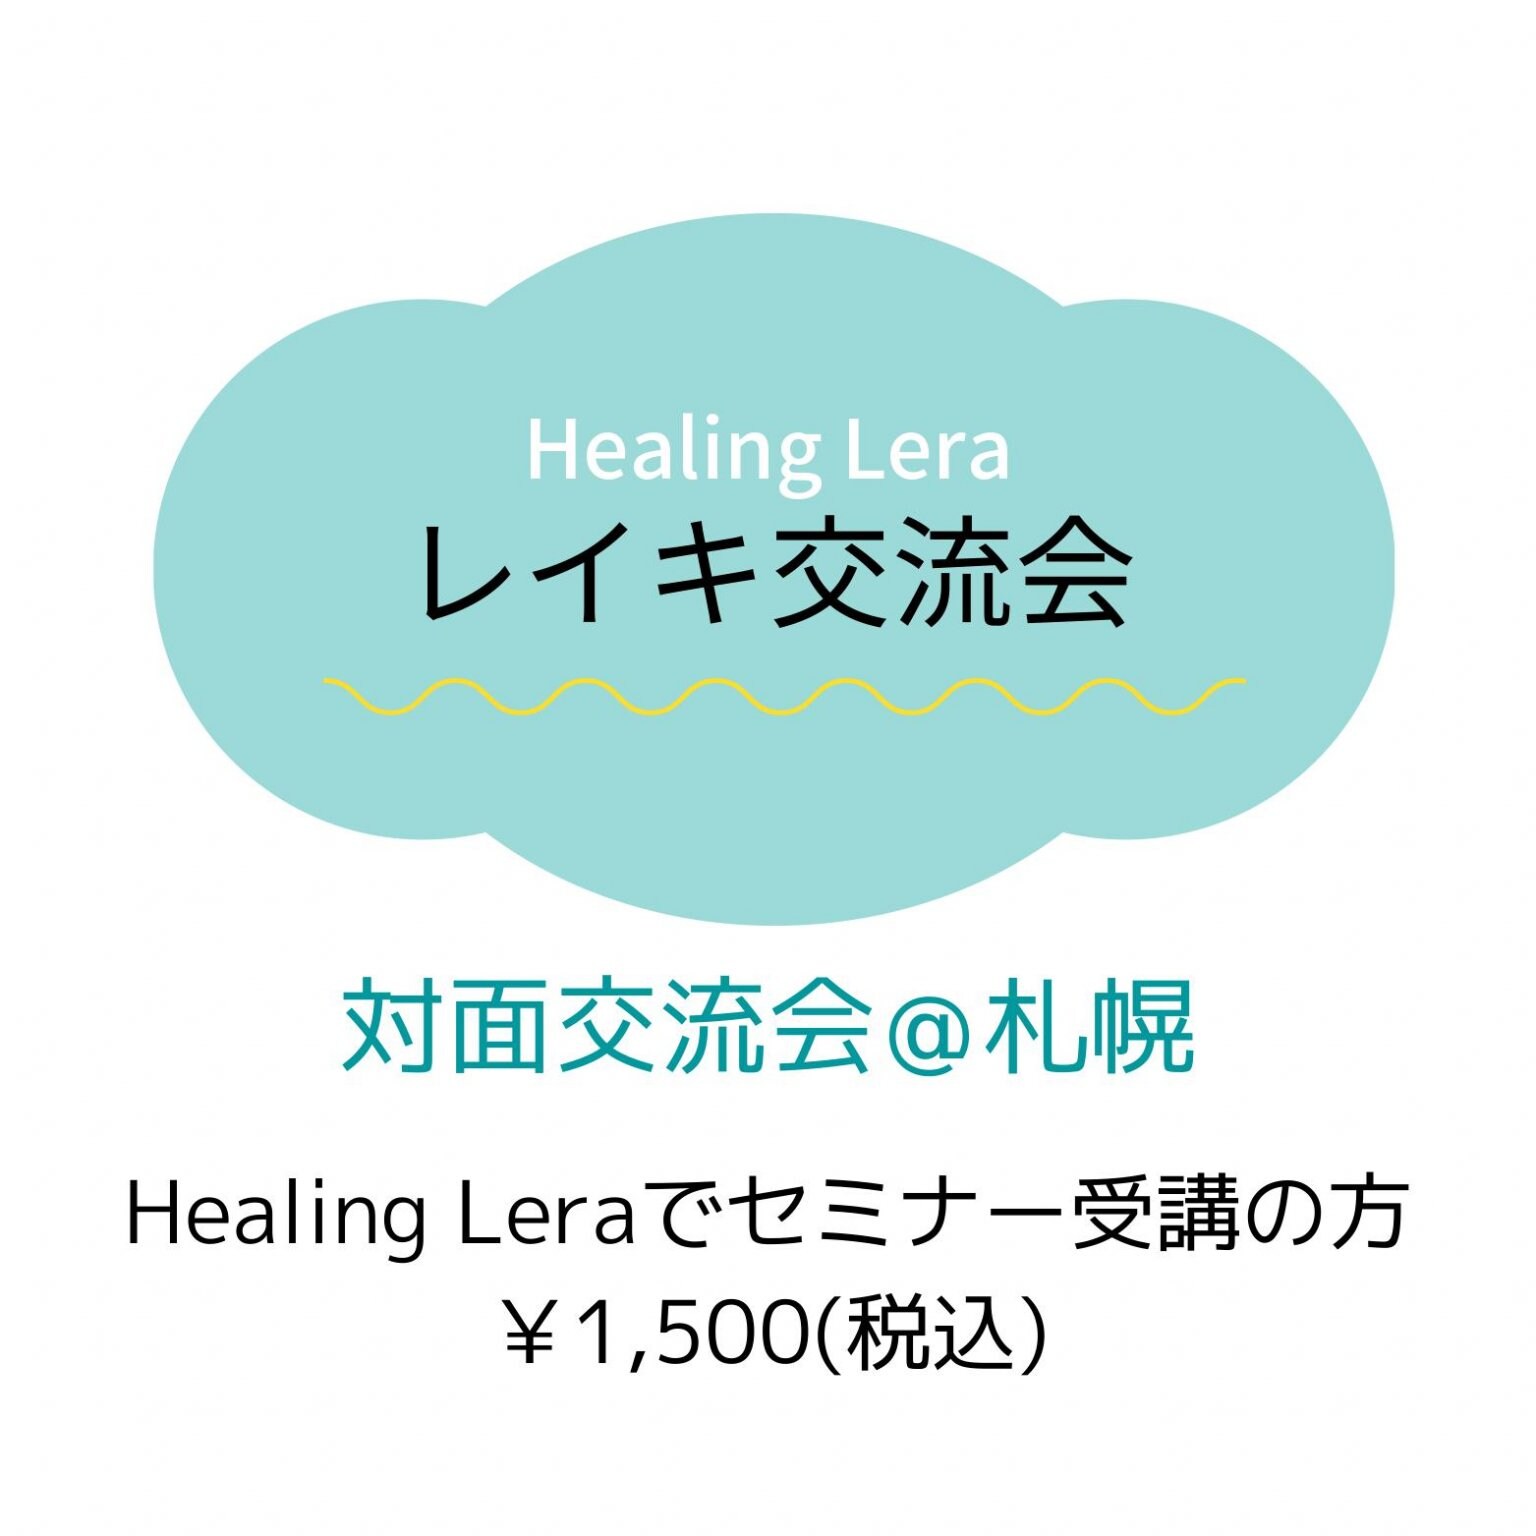 Healing Lera 11月の対面「レイキ交流会」